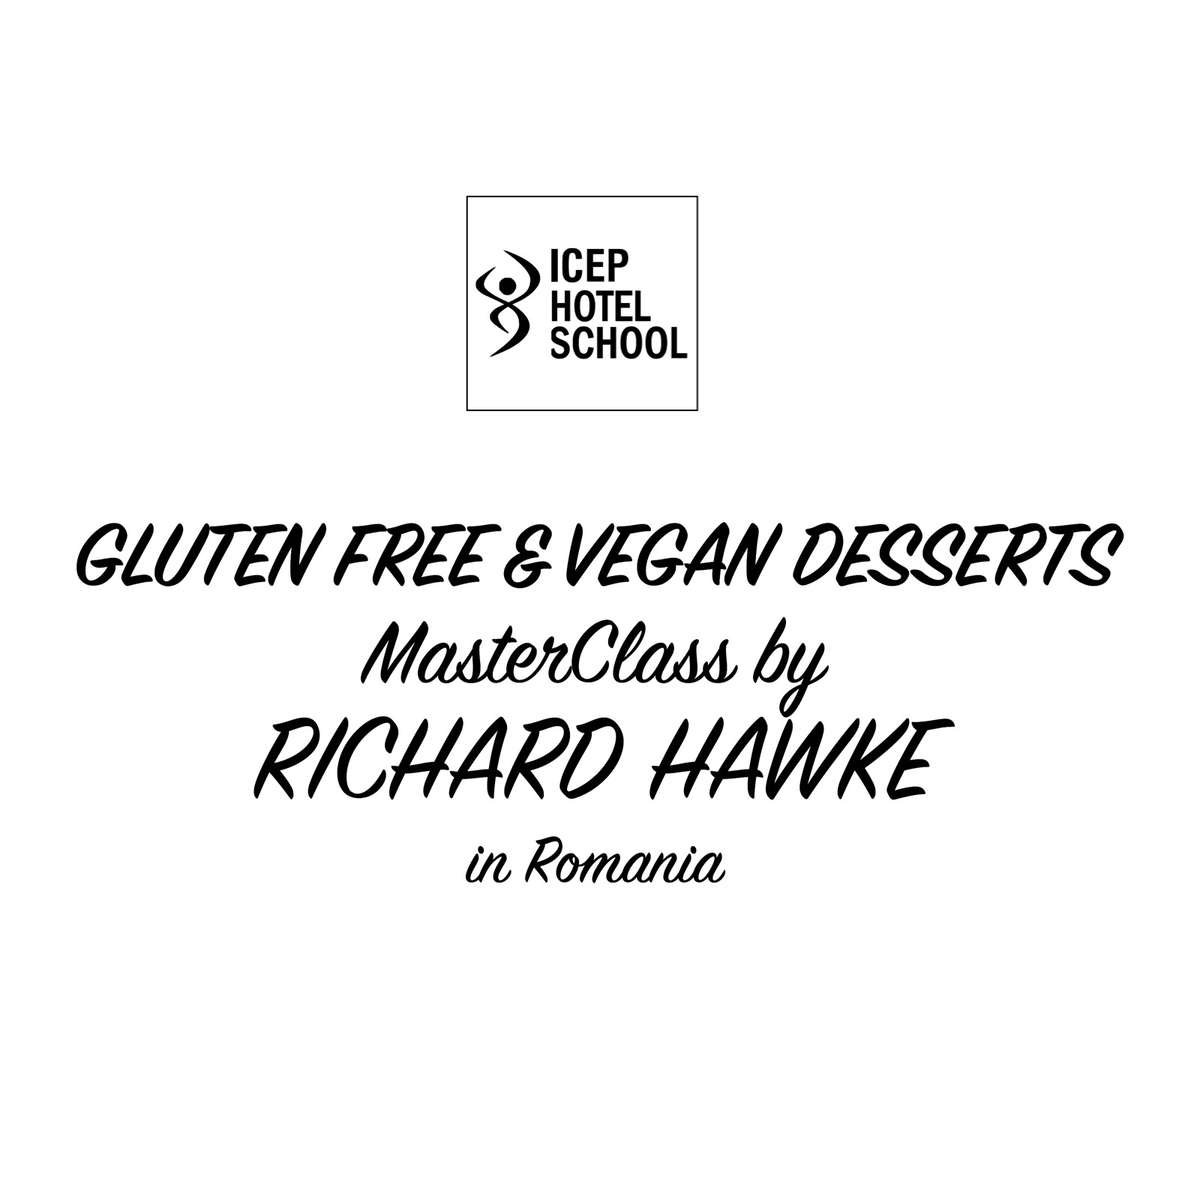 Gluten Free & Vegan Desserts MasterClass Richard Hawke